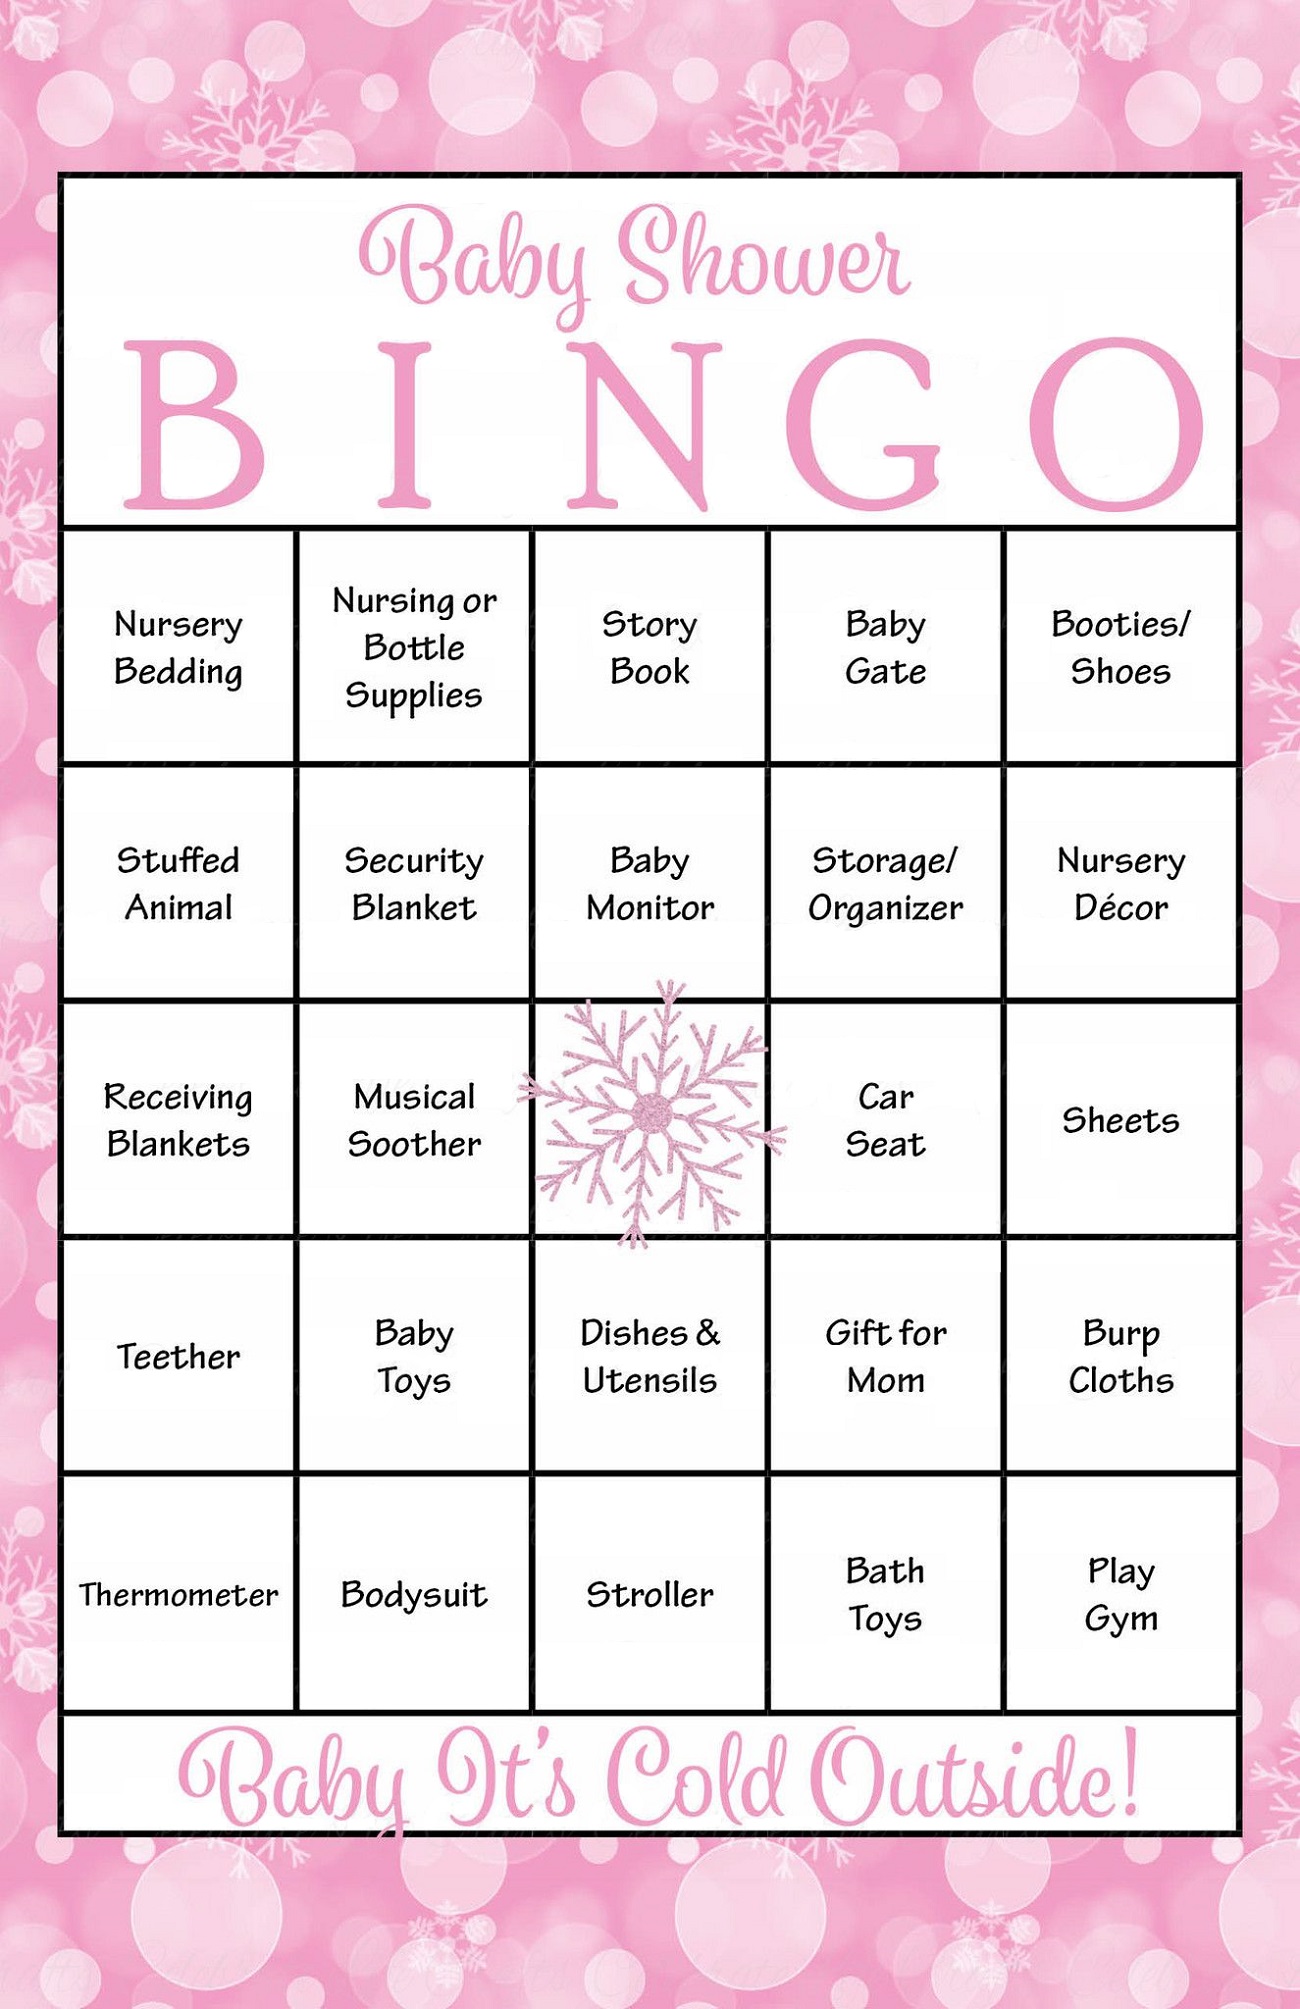 Bingo Baby Shower Games To Print